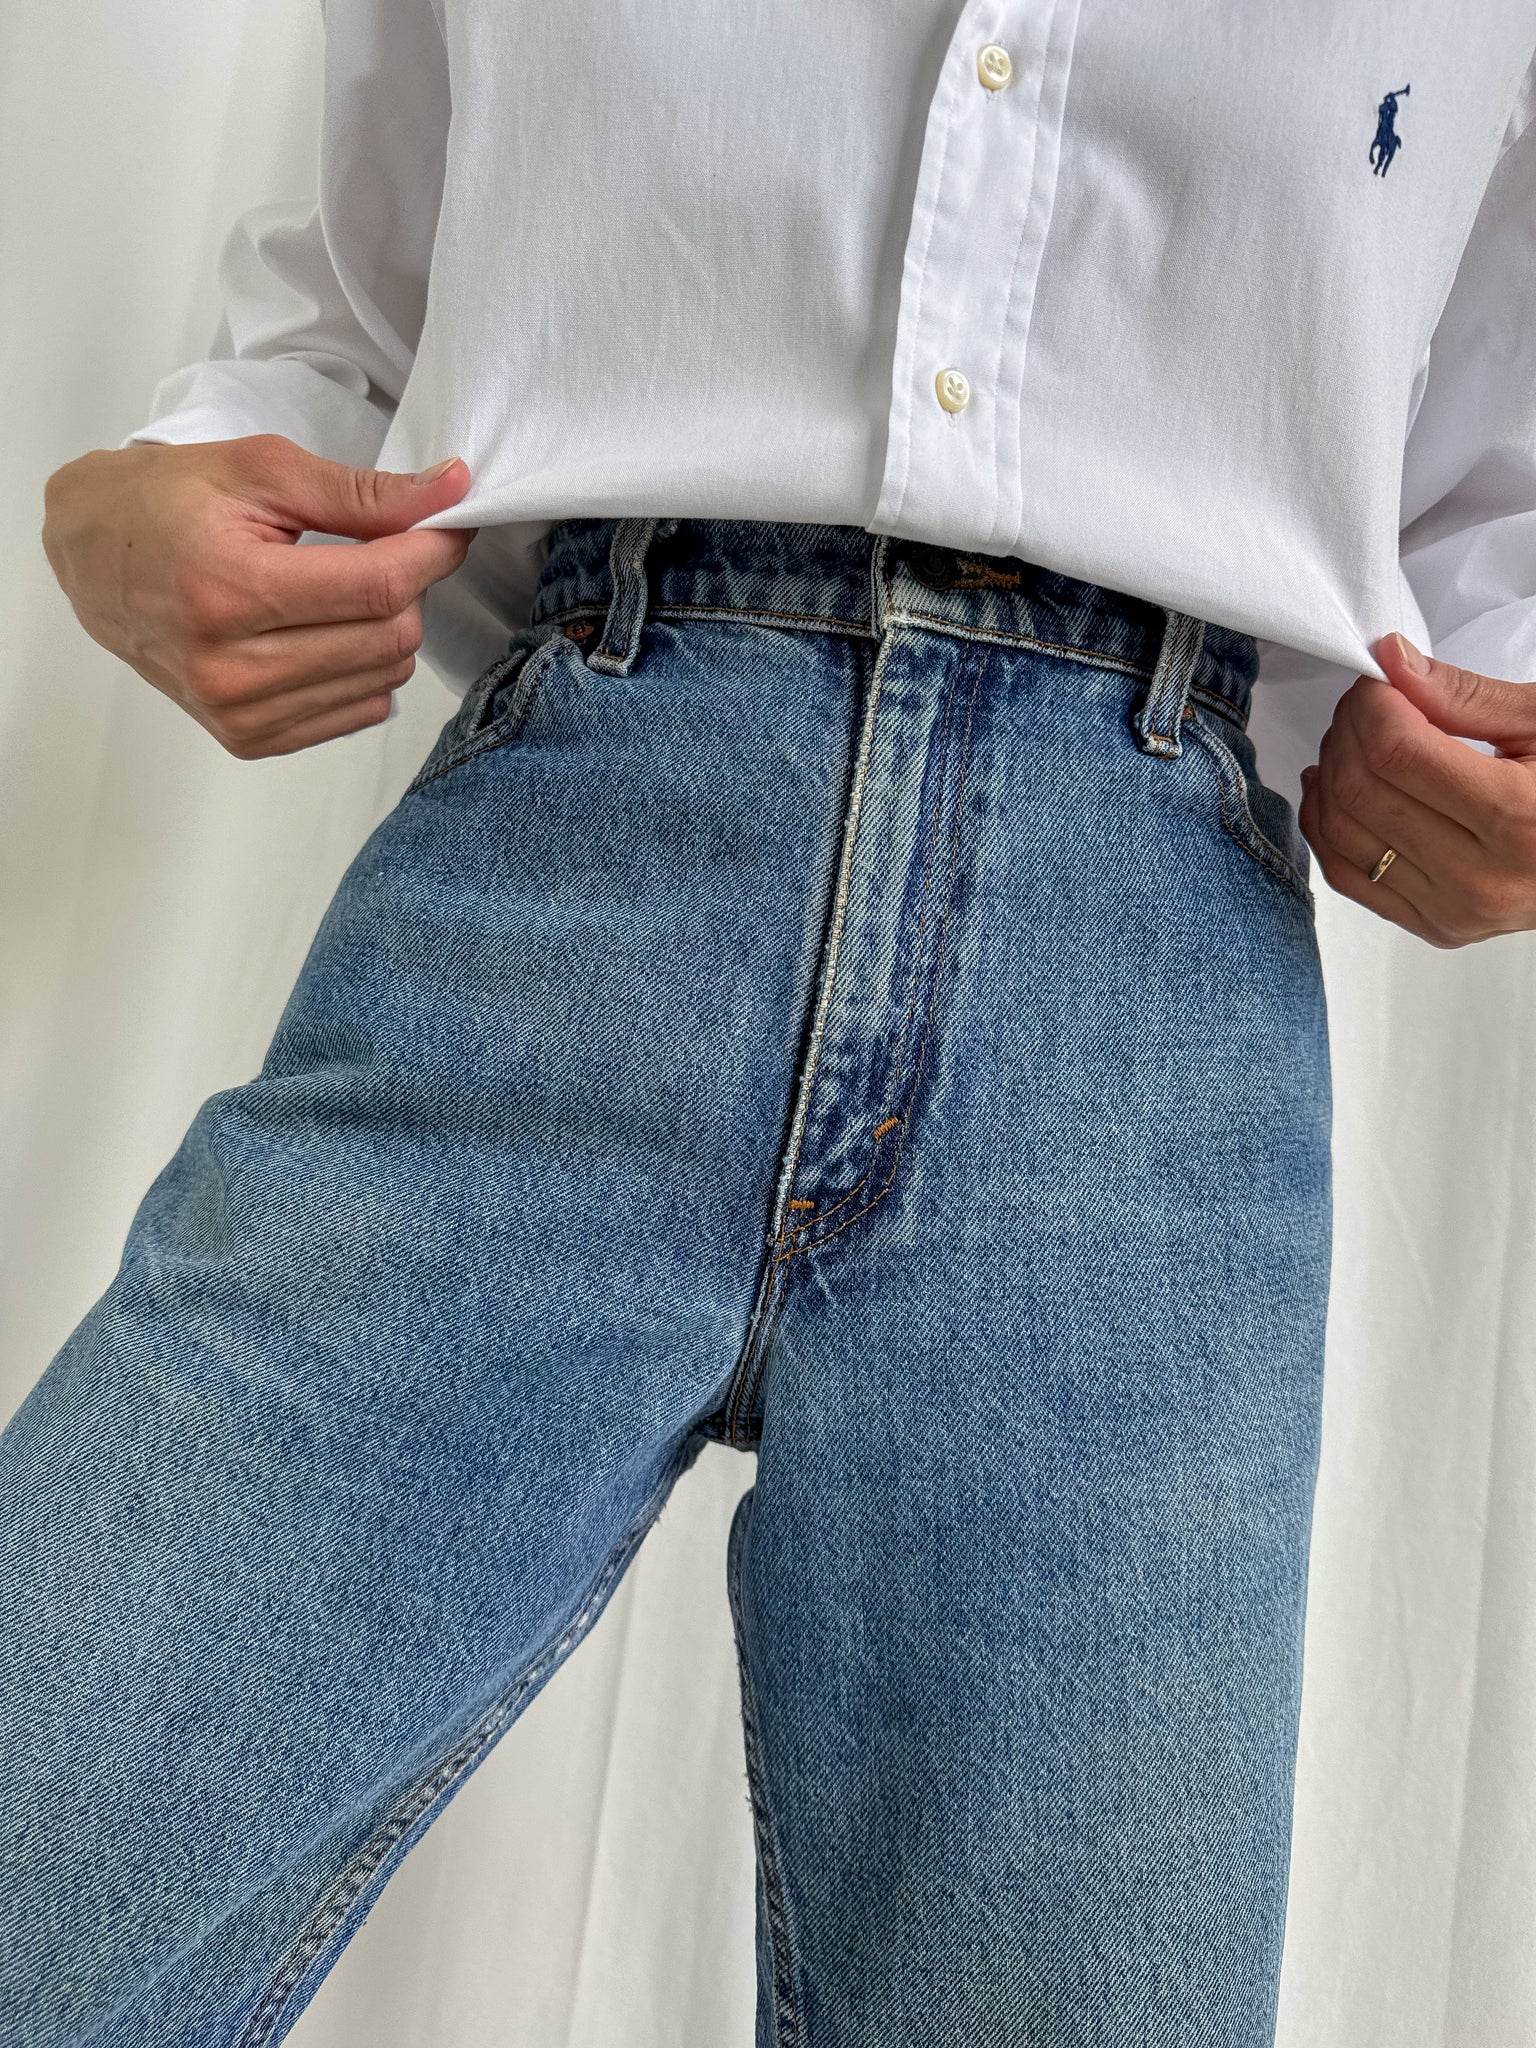 Vintage Bleu Levi's 550 Denim Jeans